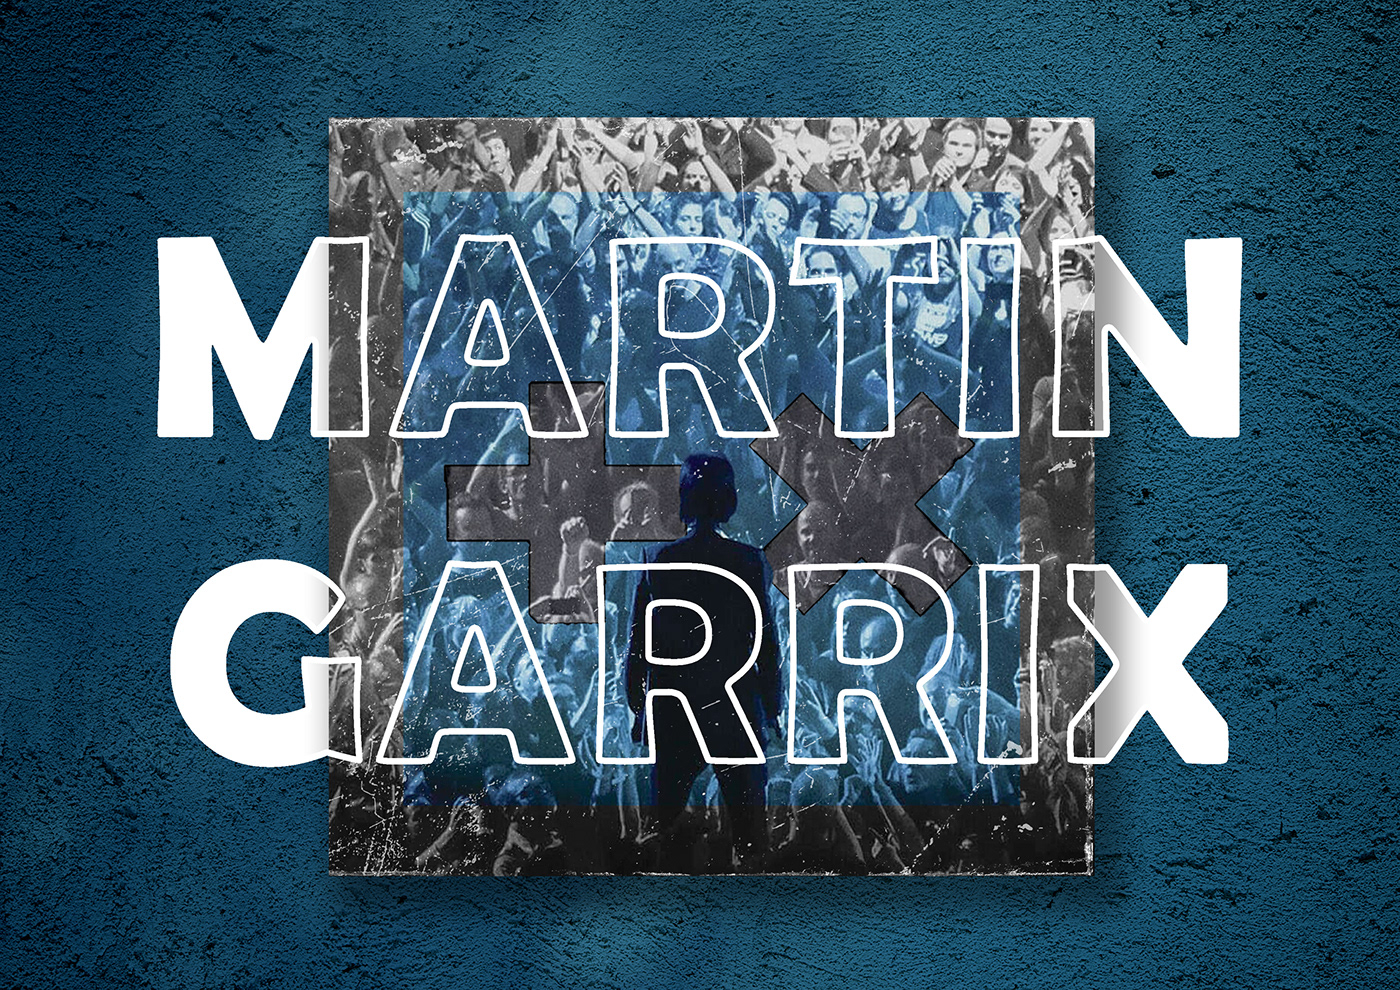 album cover music Martin Garrix Poster Design photoshop